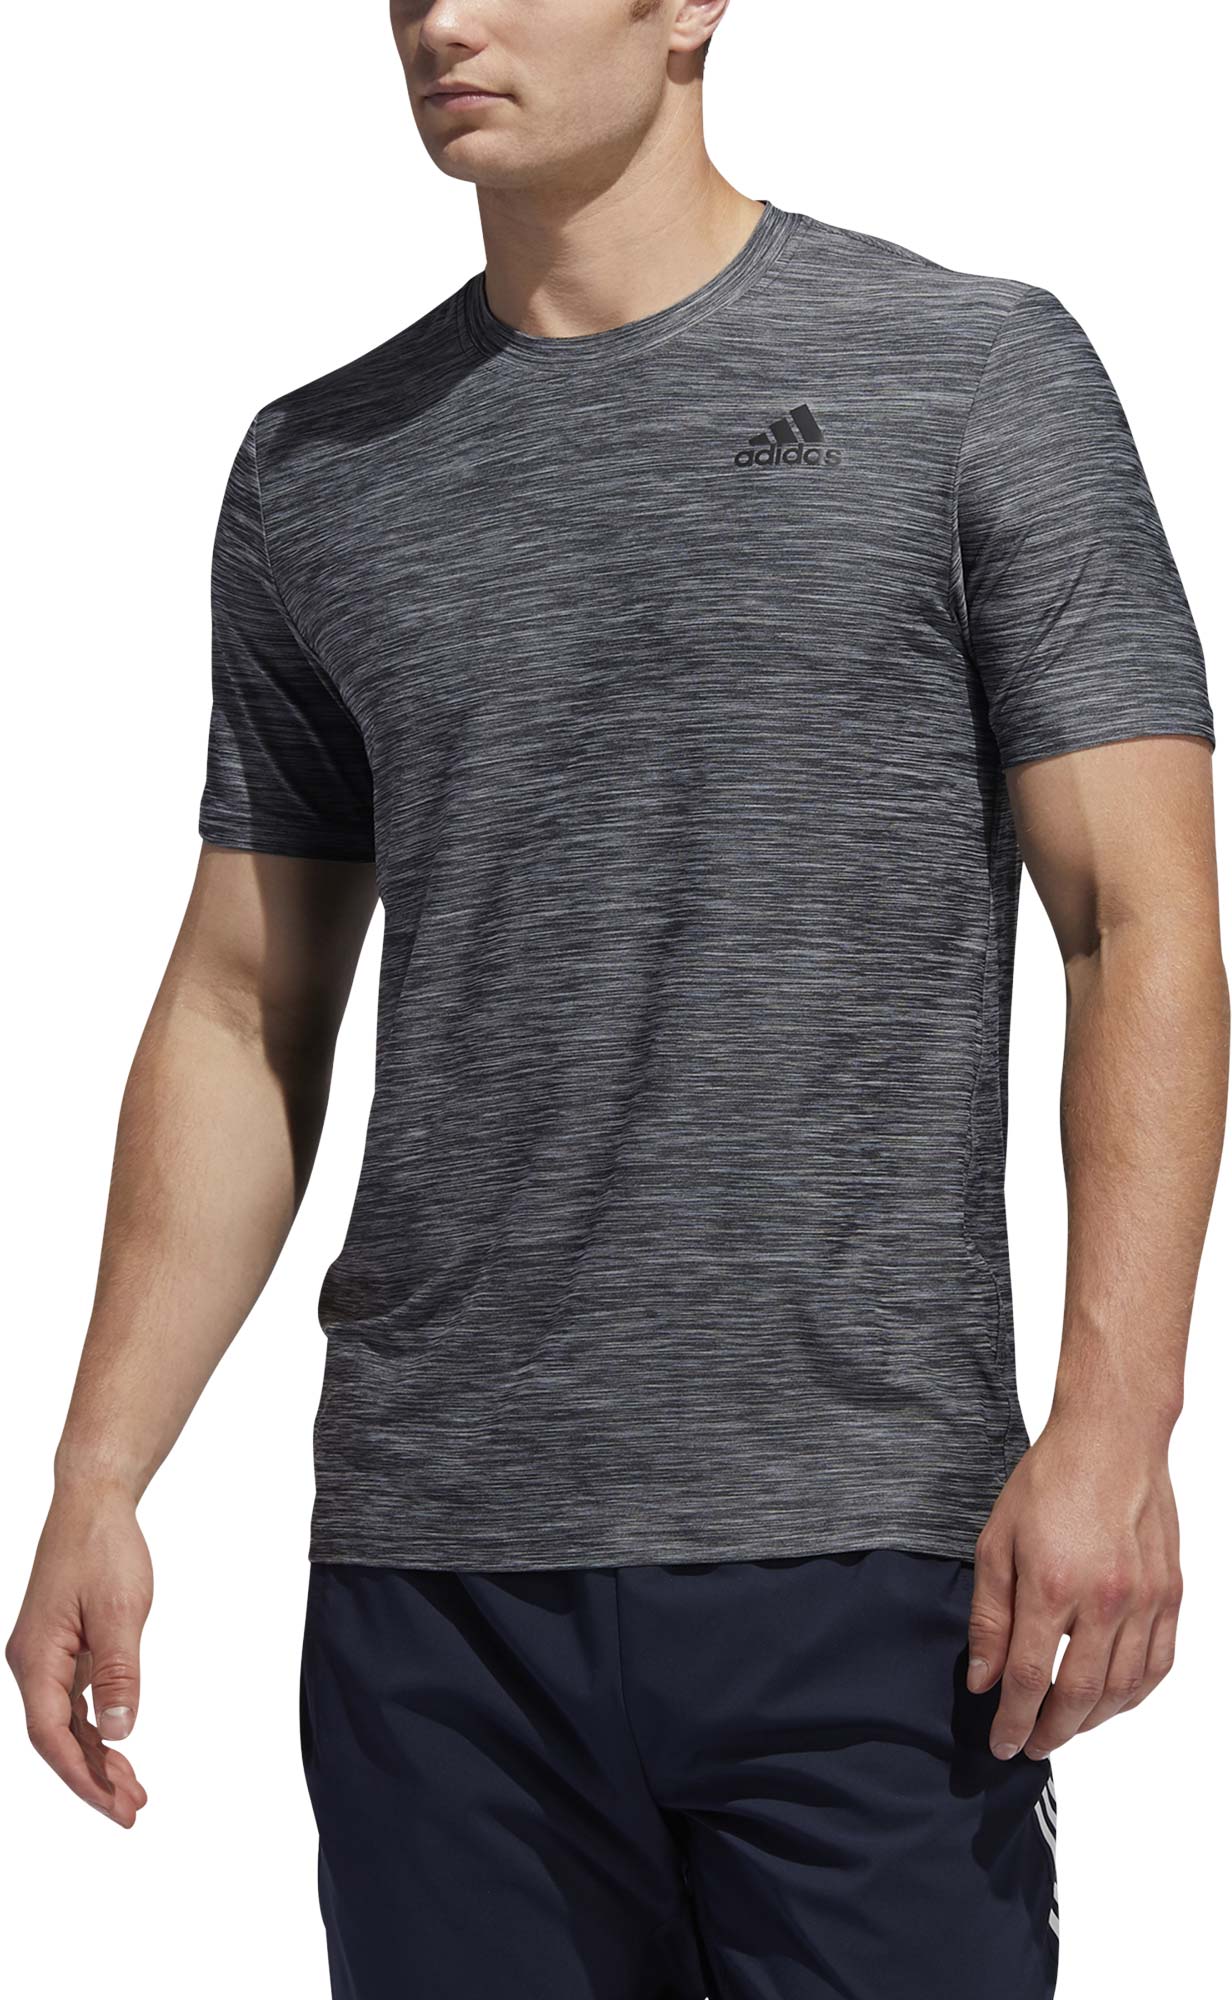 Men's sports T-shirt